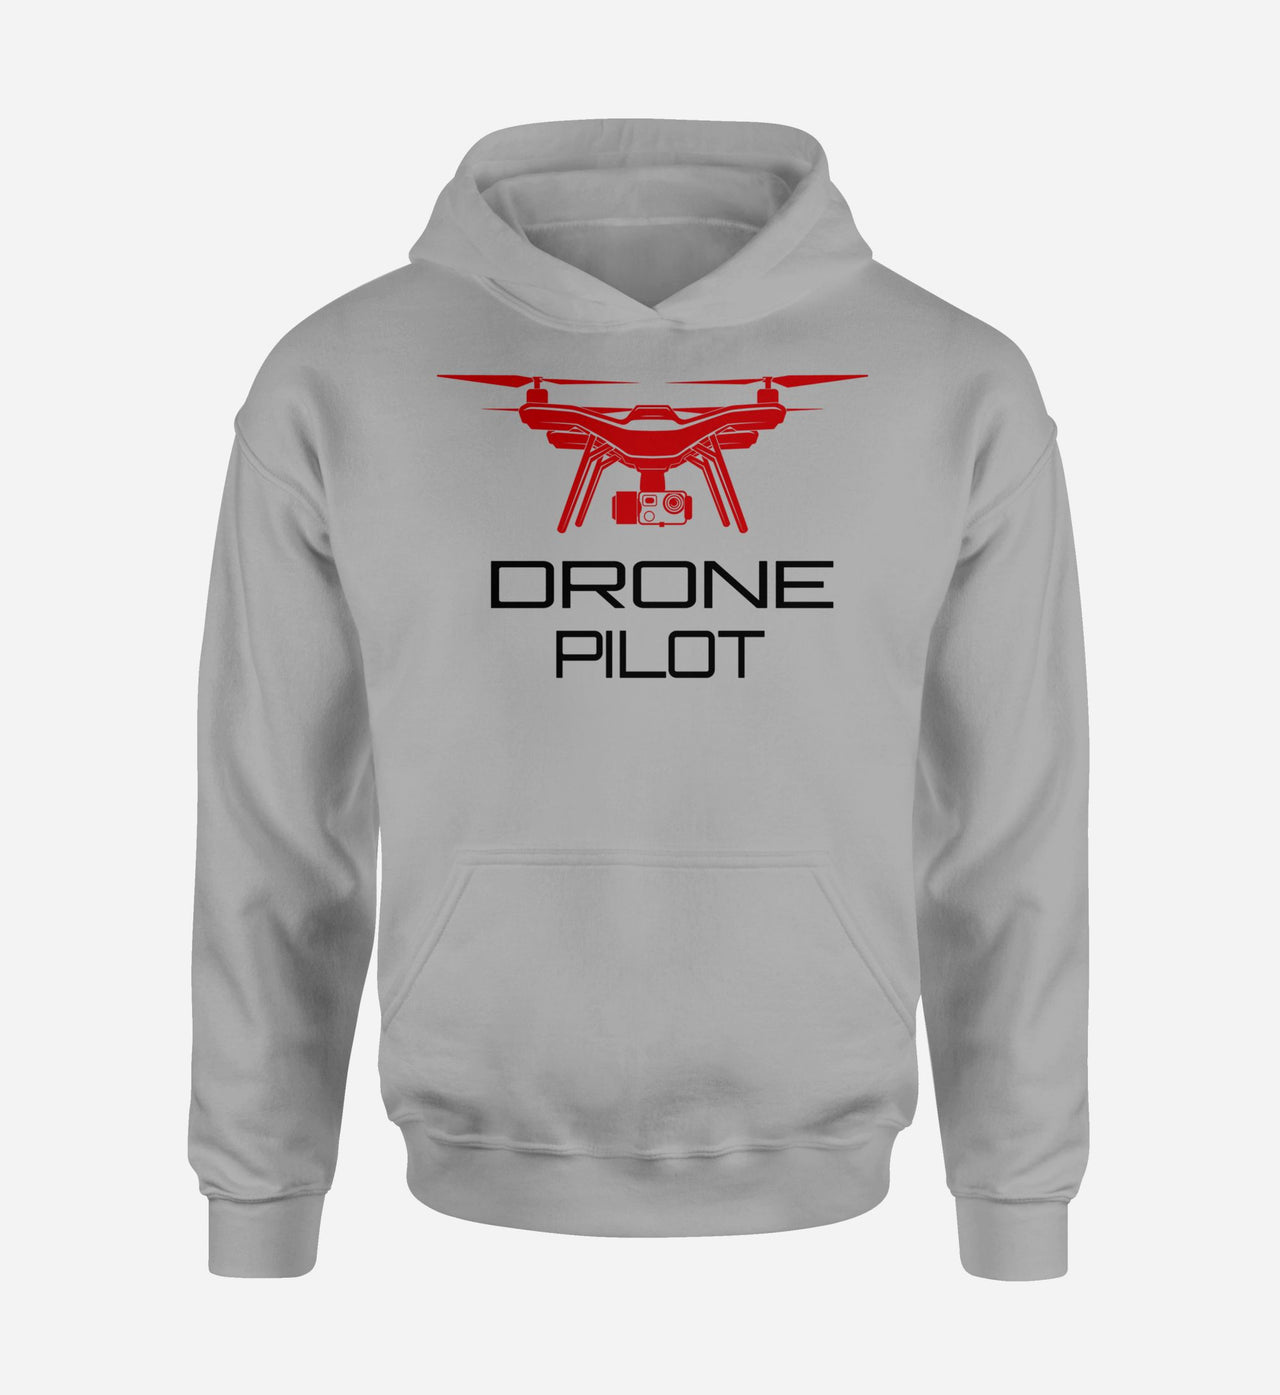 Drone Pilot Designed Hoodies